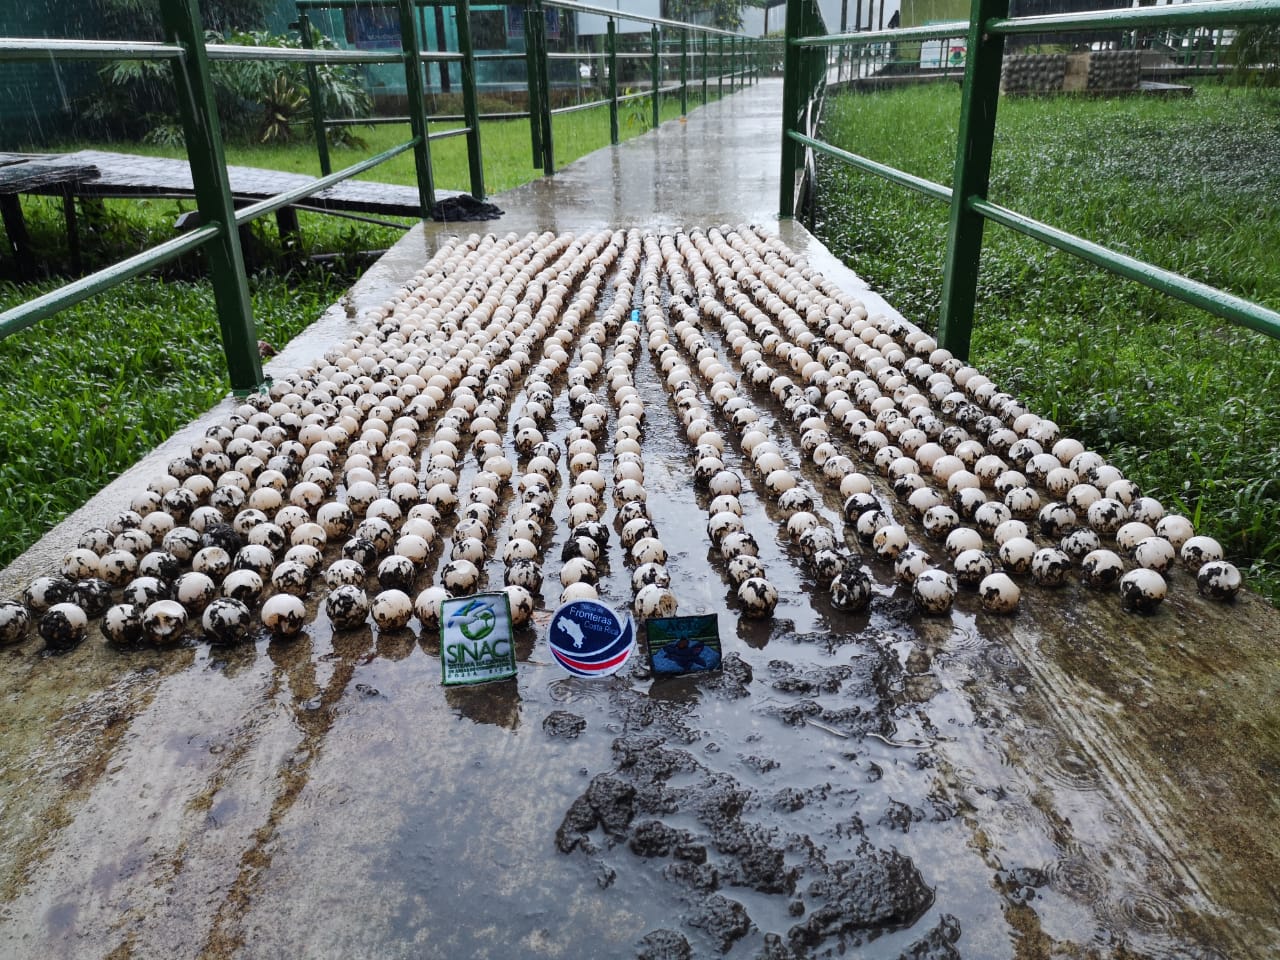 710 huevos de tortuga fueron decomisados a saqueadores de nidos